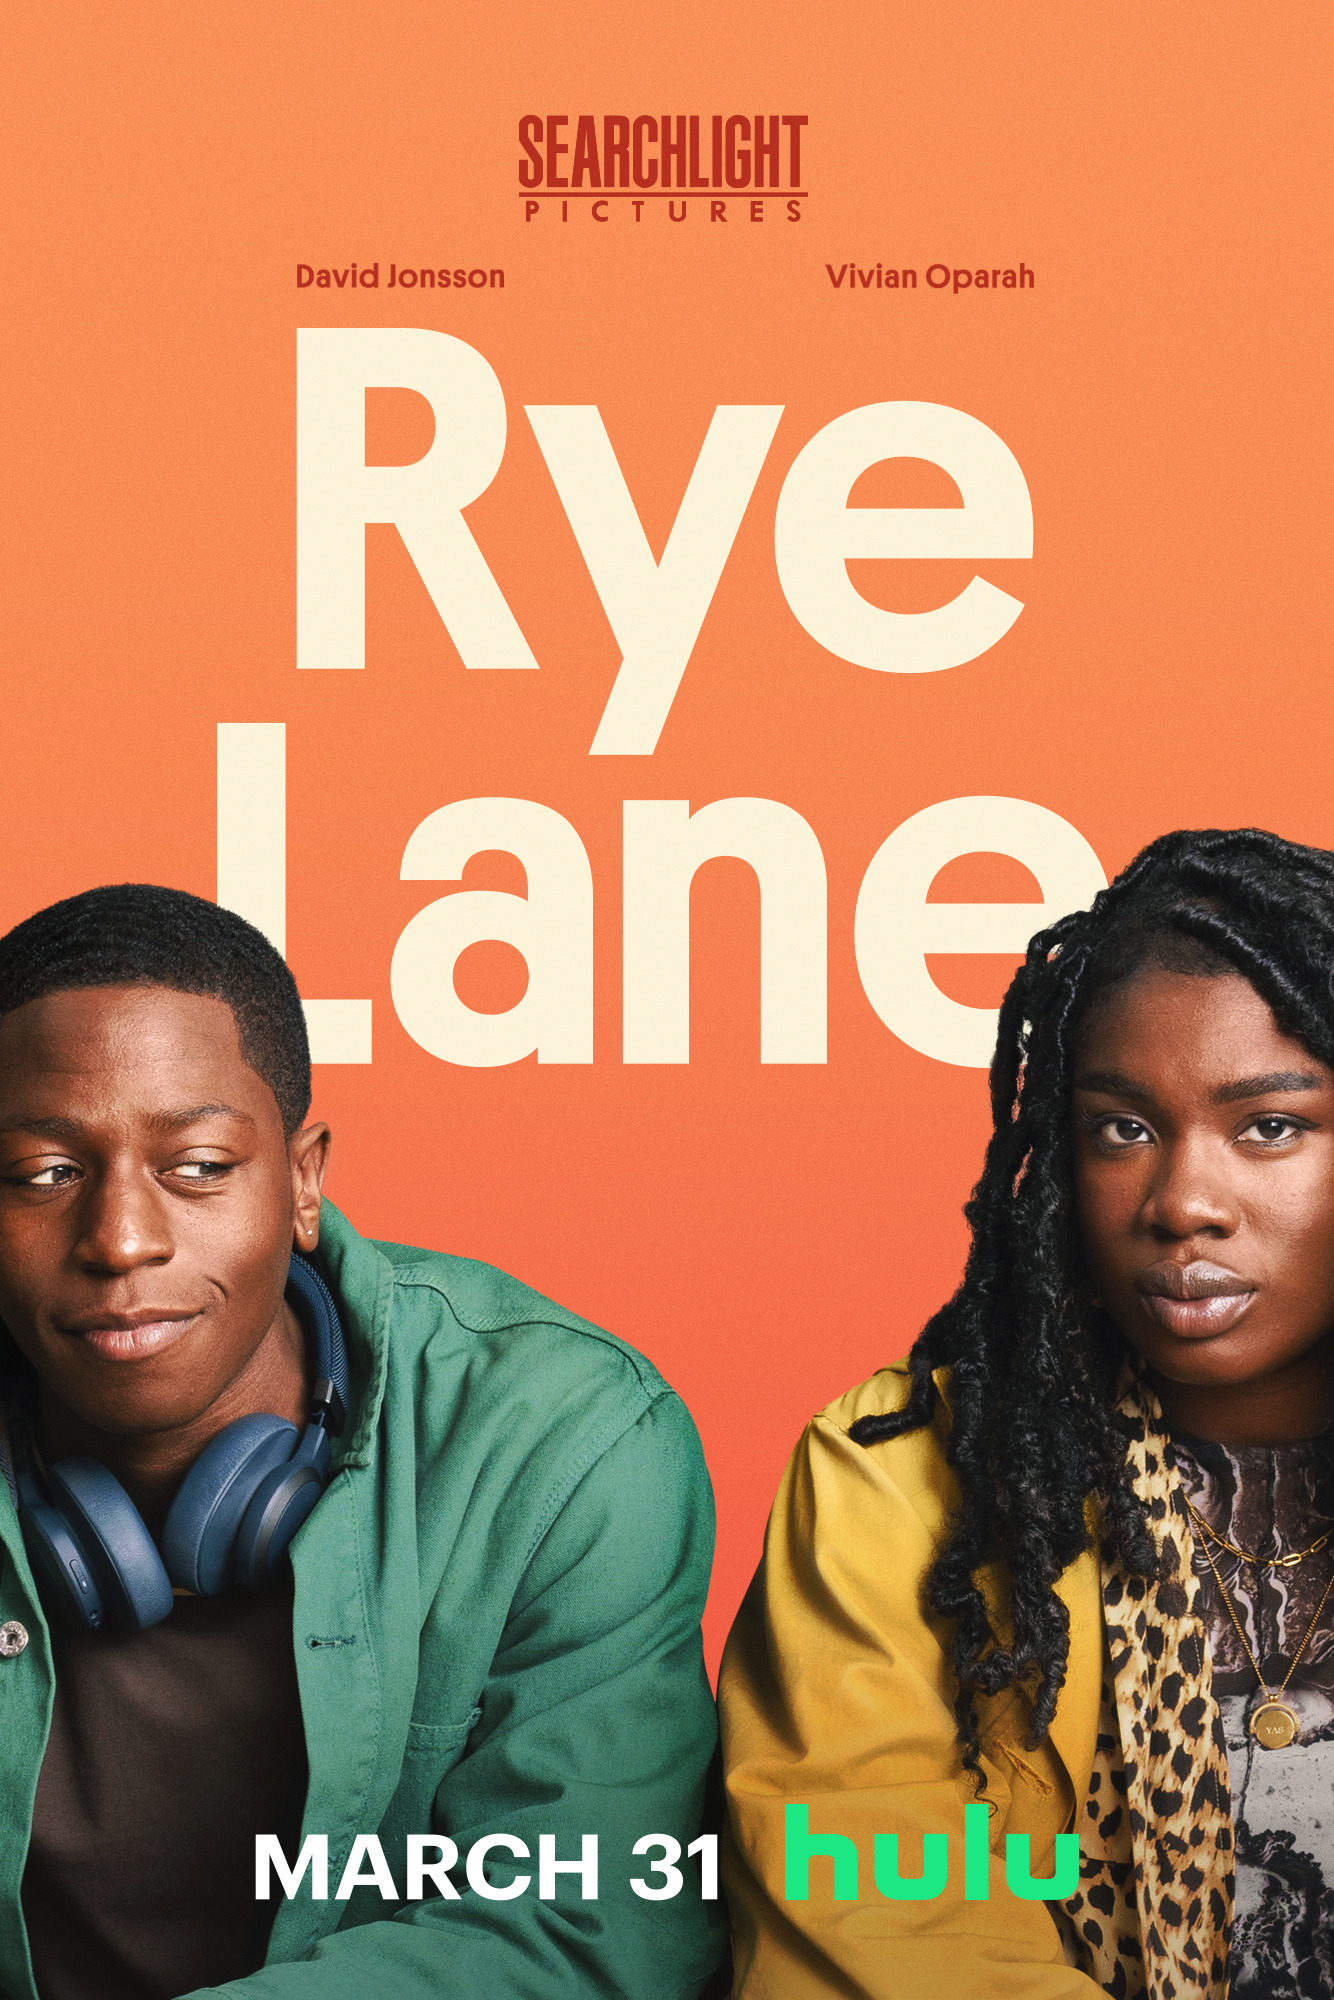 Mega Sized Movie Poster Image for Rye Lane (#2 of 2)